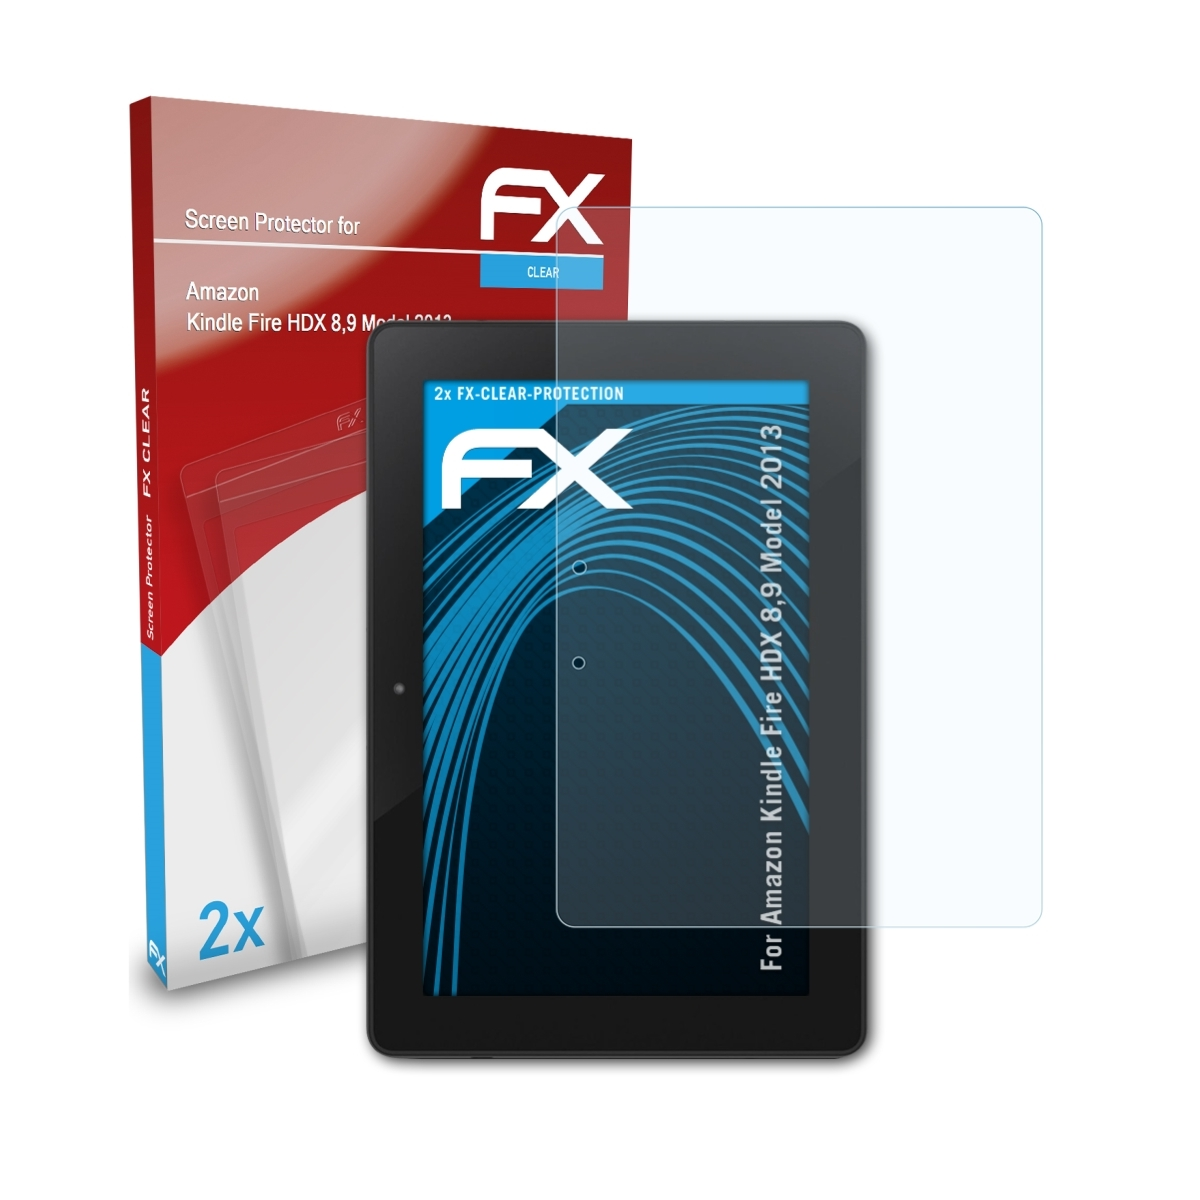 HDX ATFOLIX 2013)) 8,9 Fire Amazon (Model 2x Displayschutz(für FX-Clear Kindle